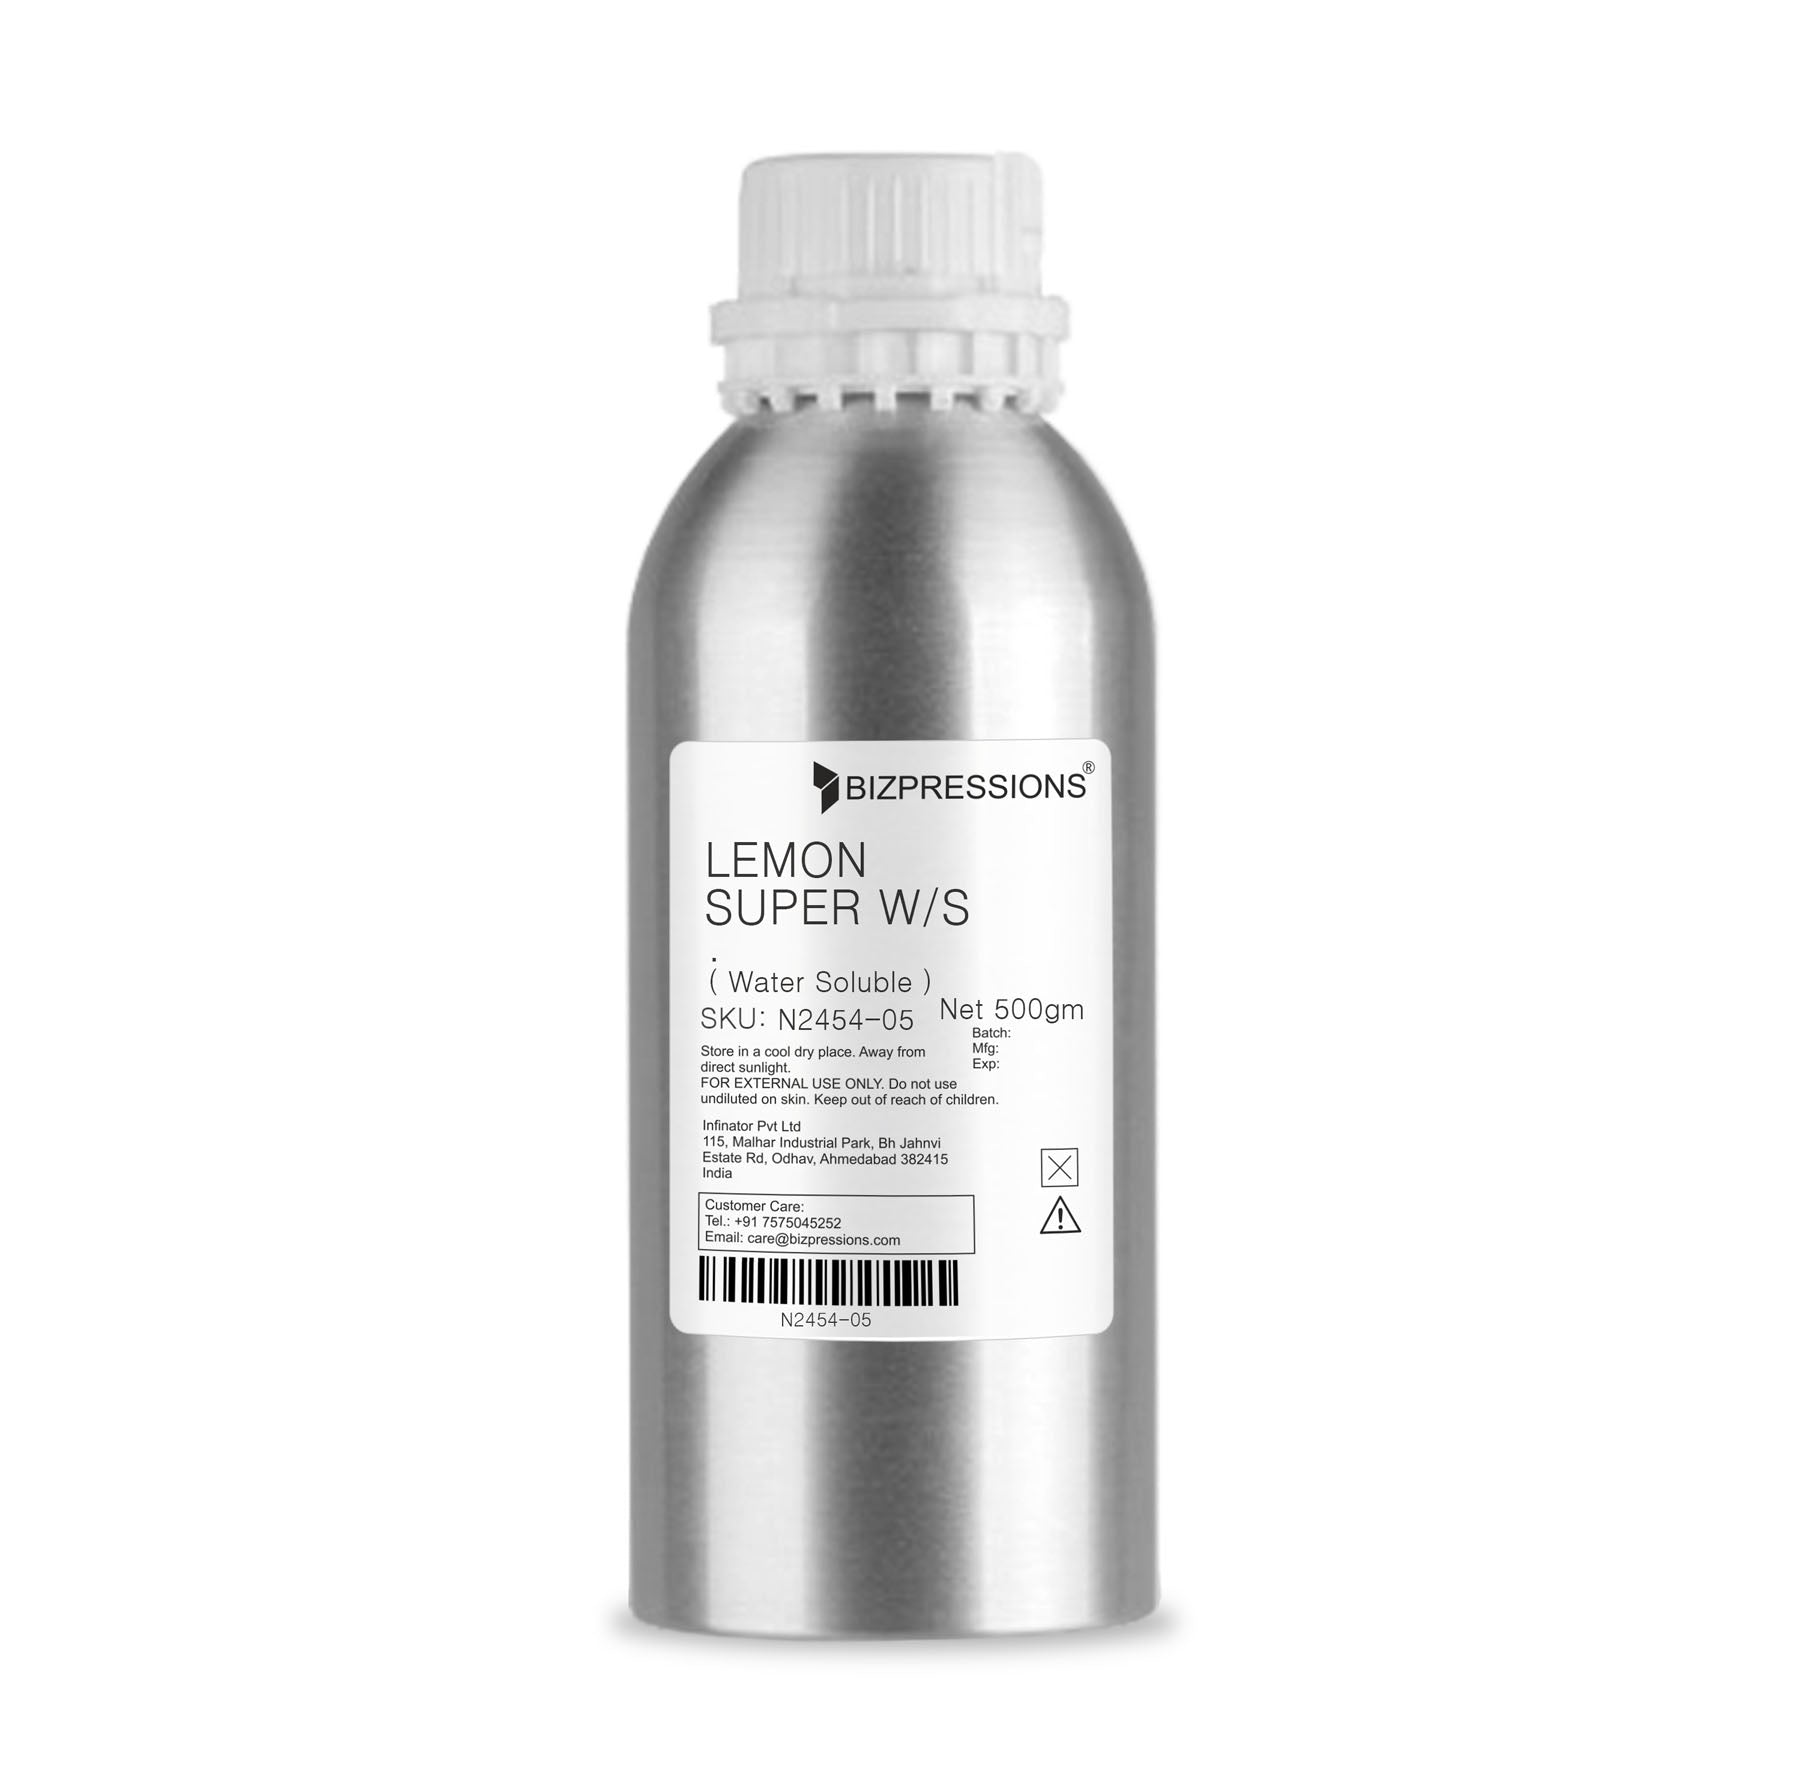 LEMON SUPER W/S - Fragrance ( Water Soluble ) - 5 kg